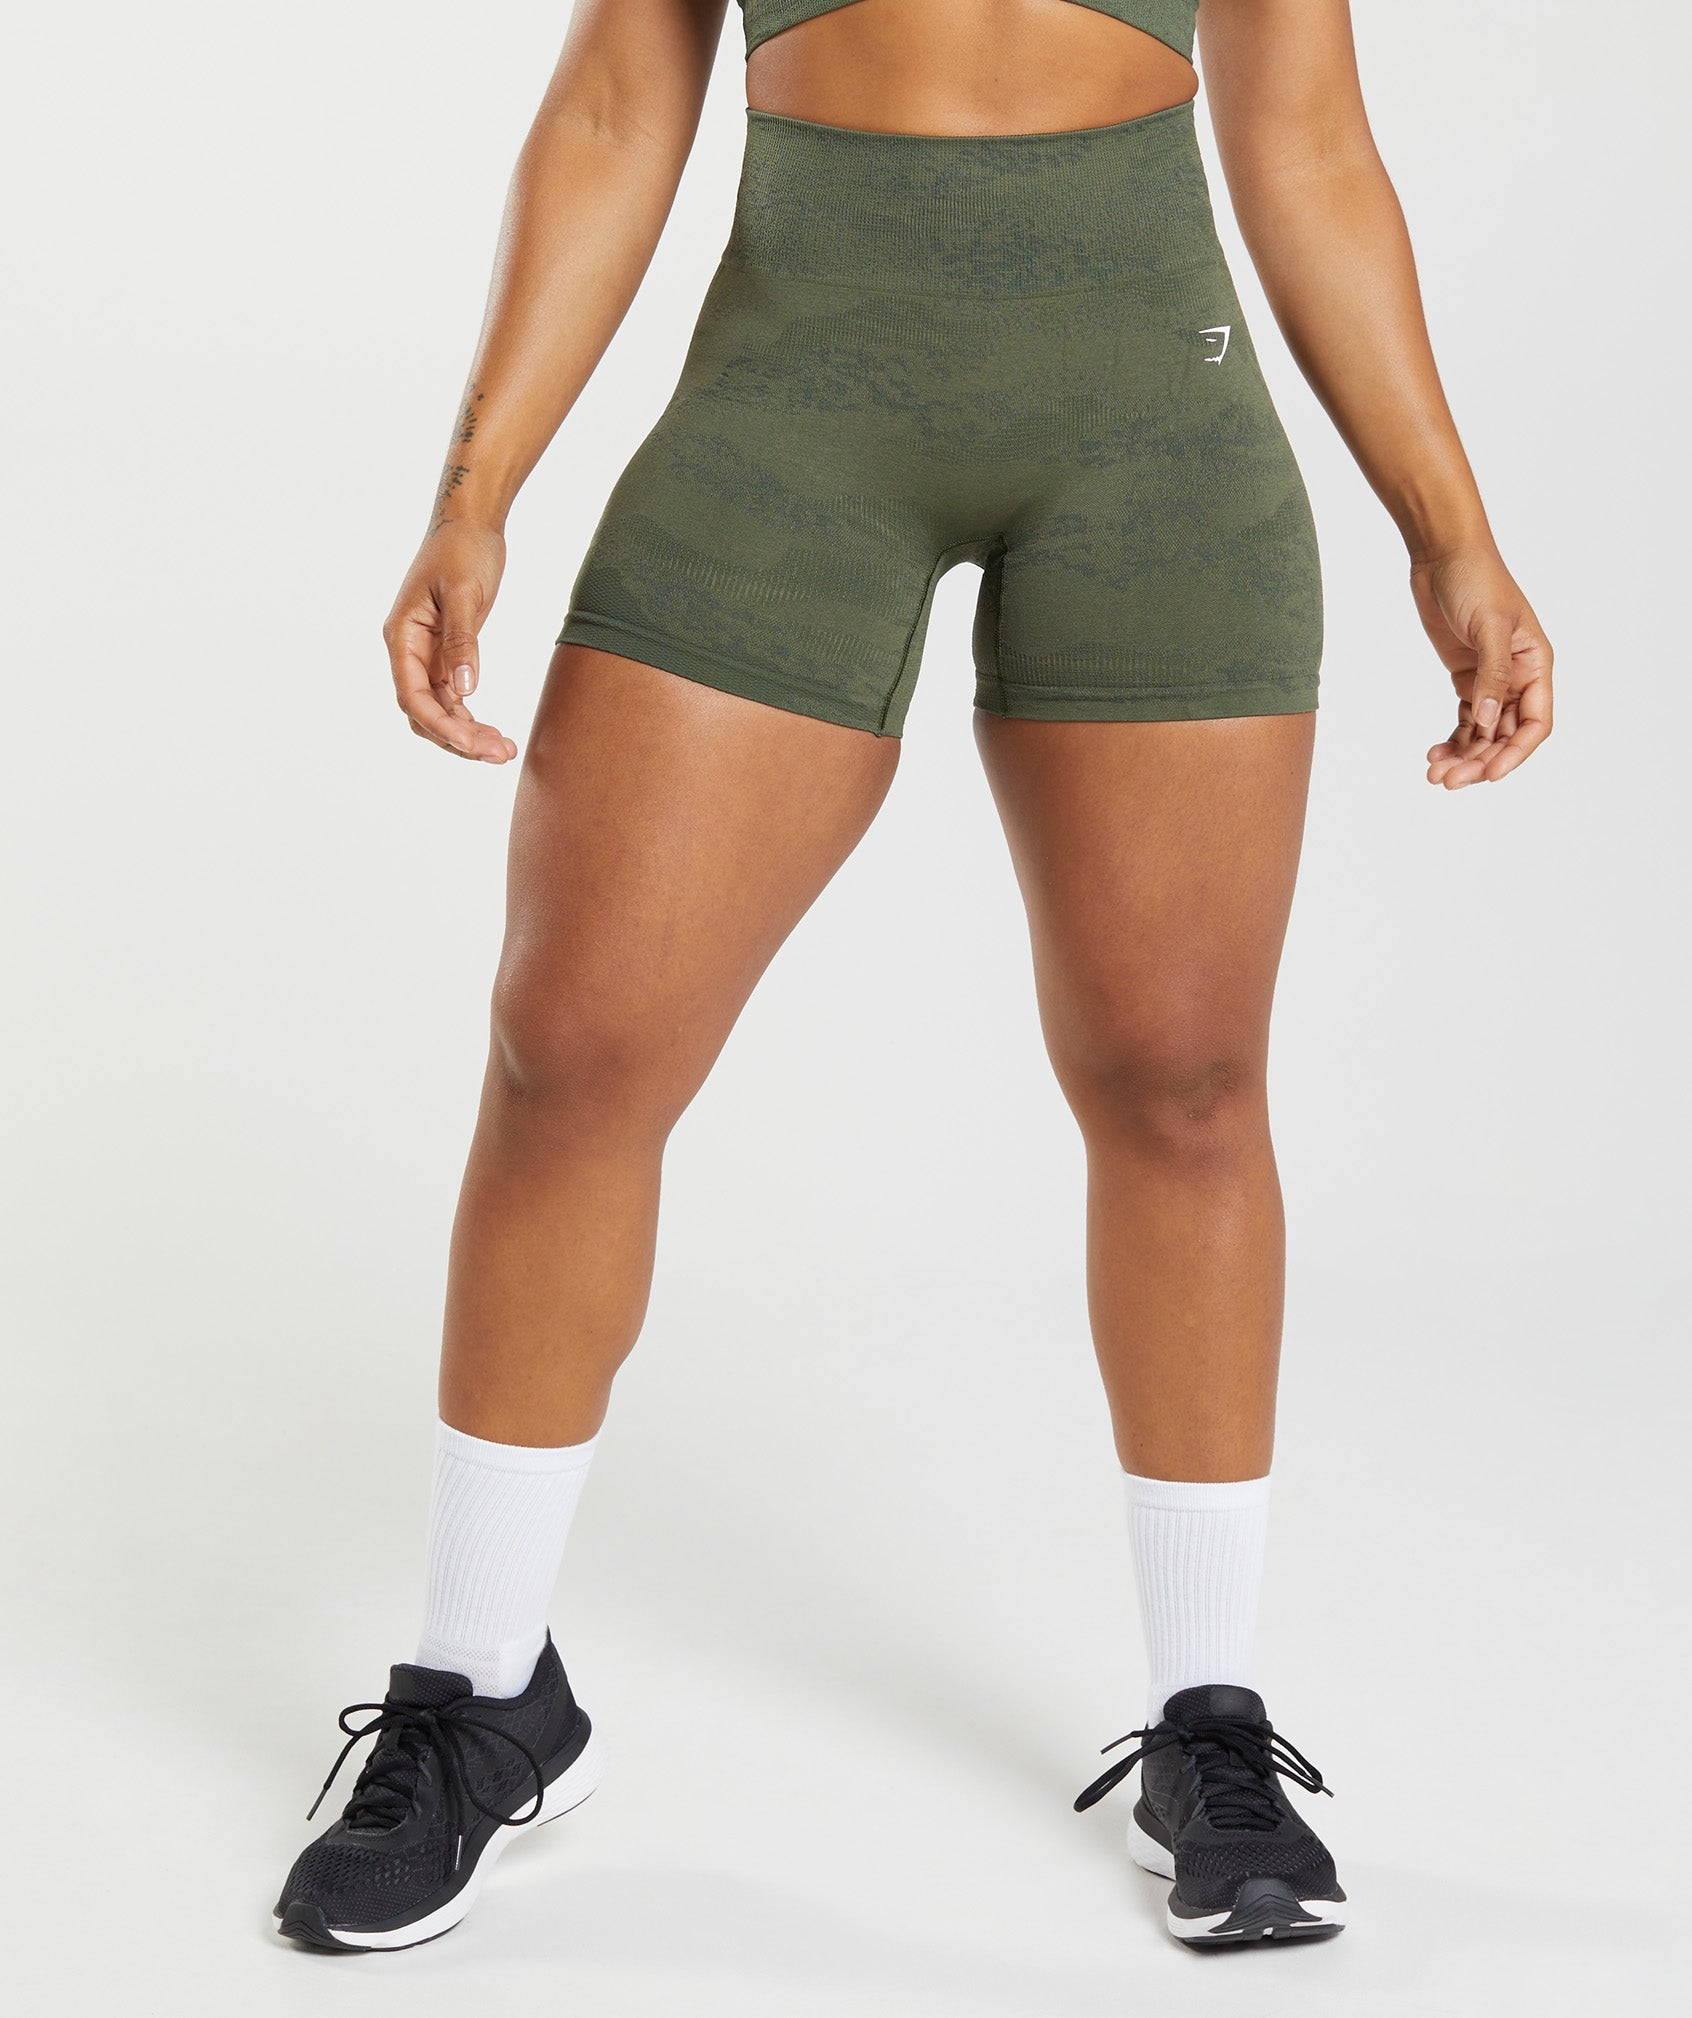 Seamless Gym Shorts Womens, Adapt Camo Seamless Shorts